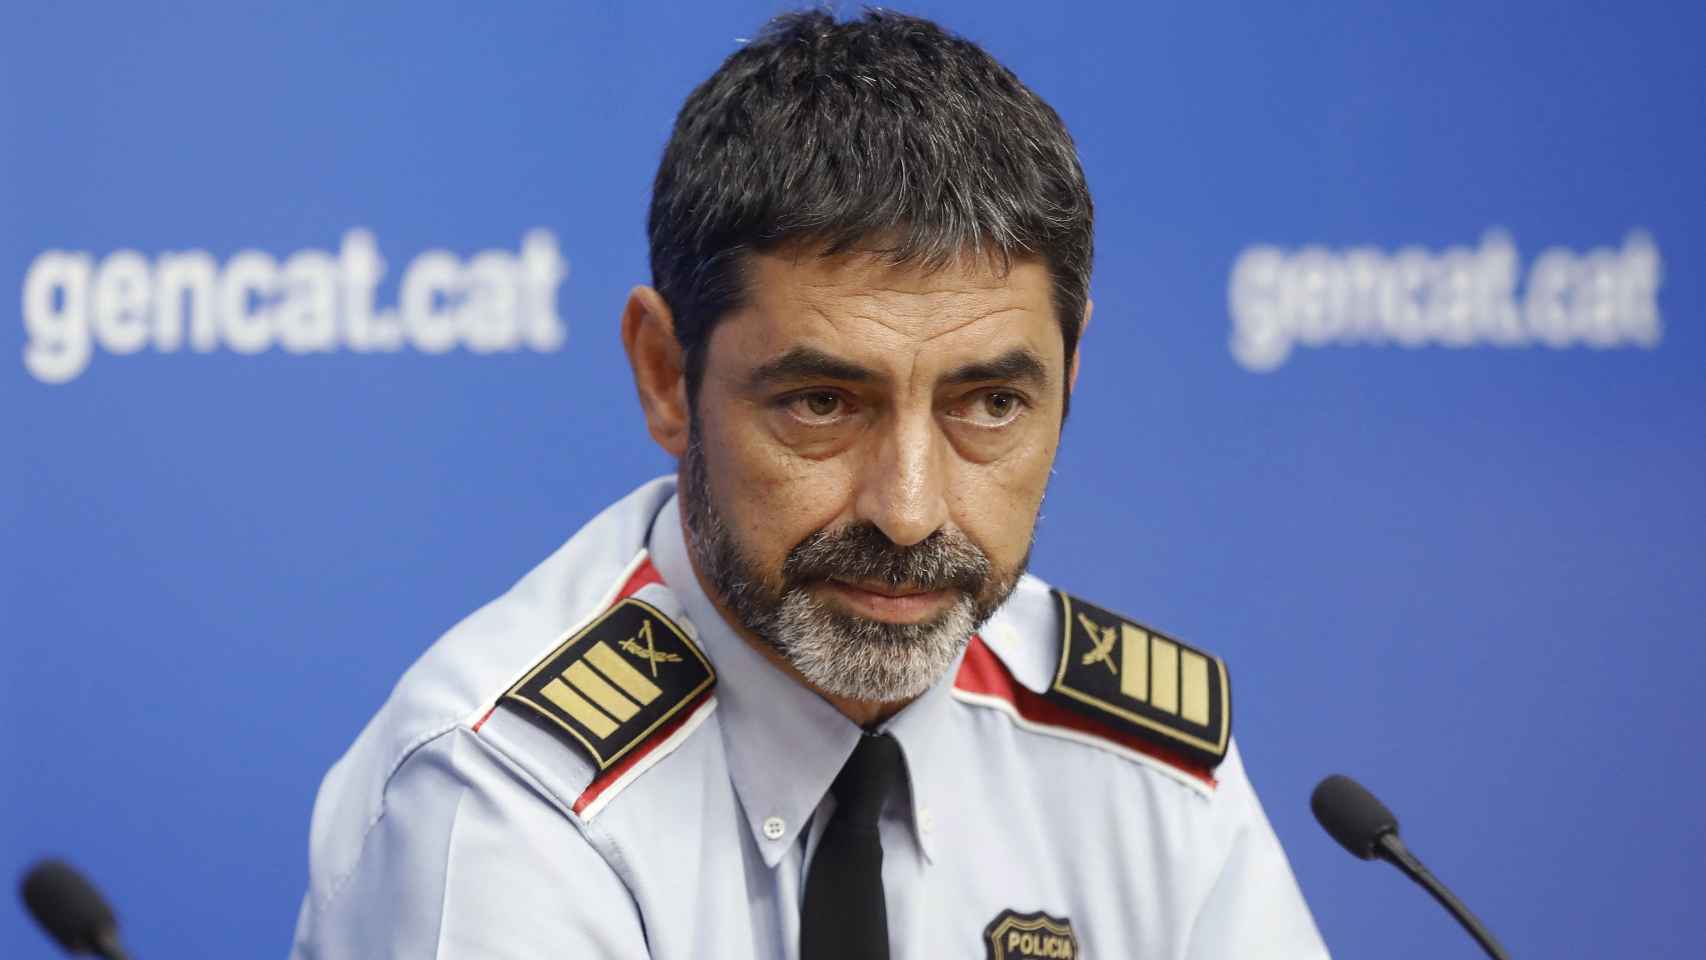 El mayor de los Mossos d'Esquadra, Josep Lluís Trapero